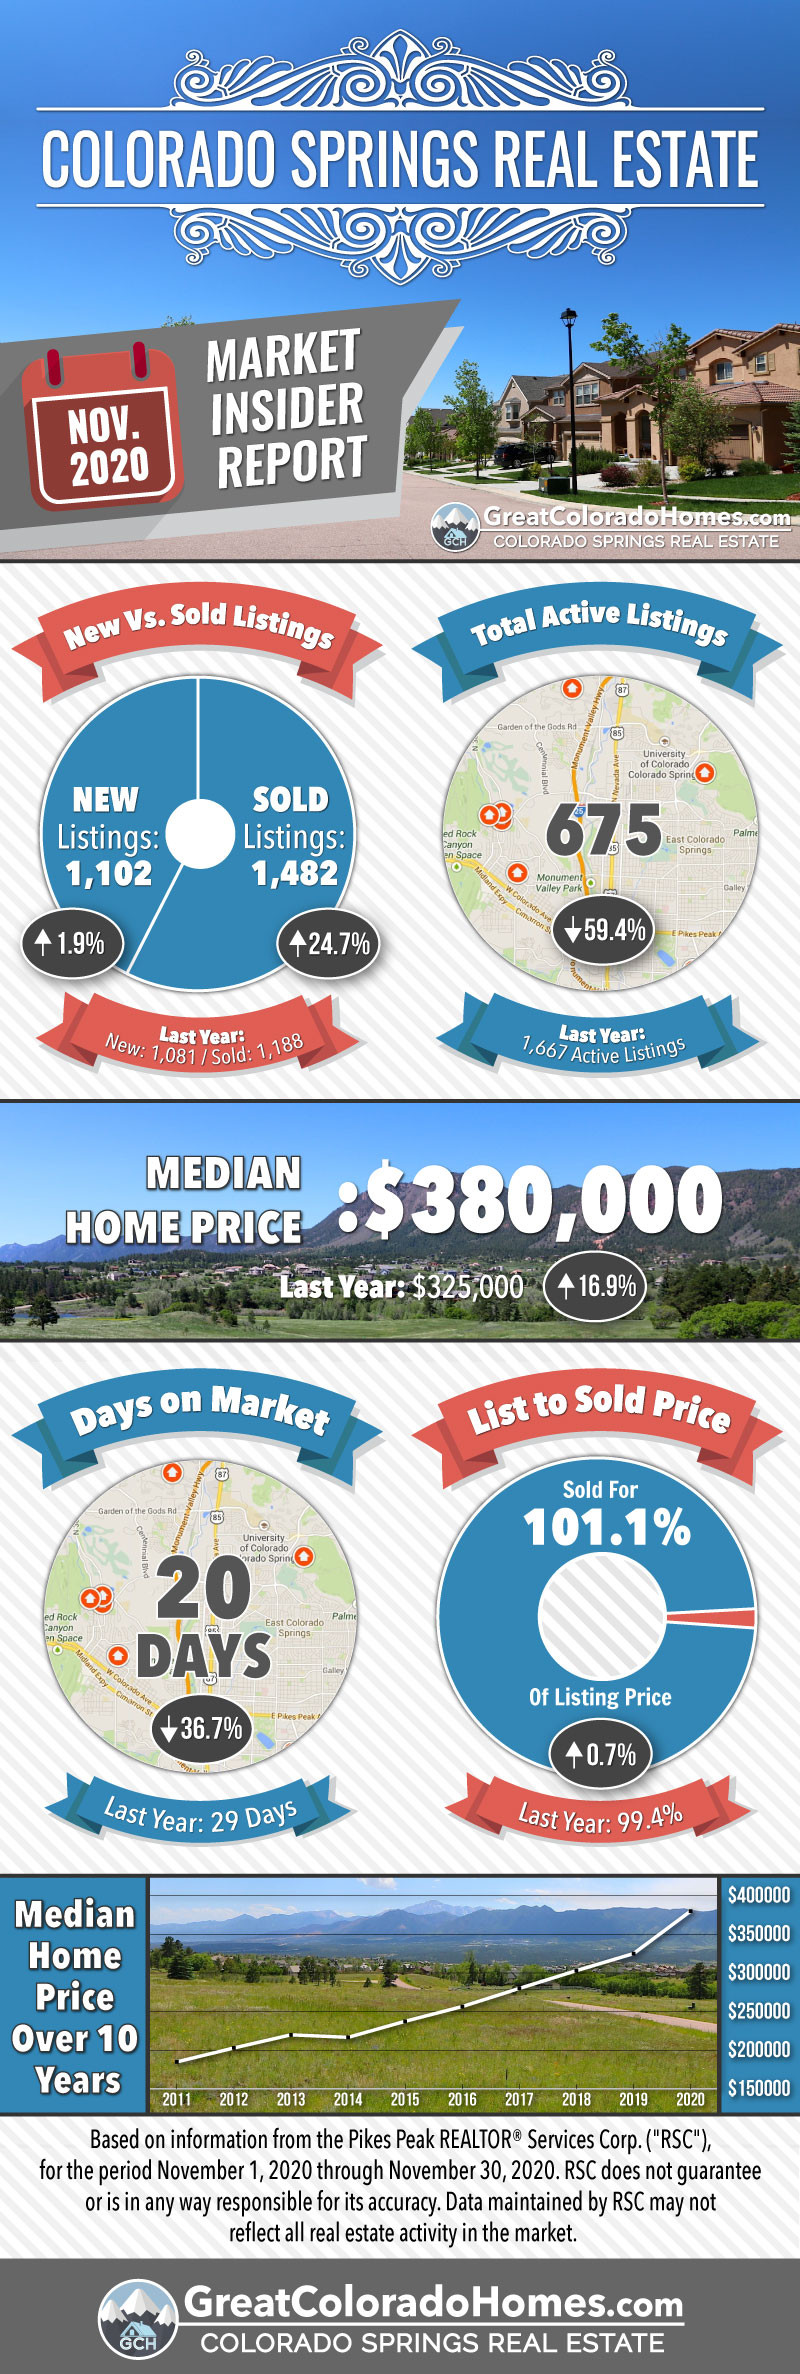 November 2020 Colorado Springs Real Estate Market Statistics Infographic